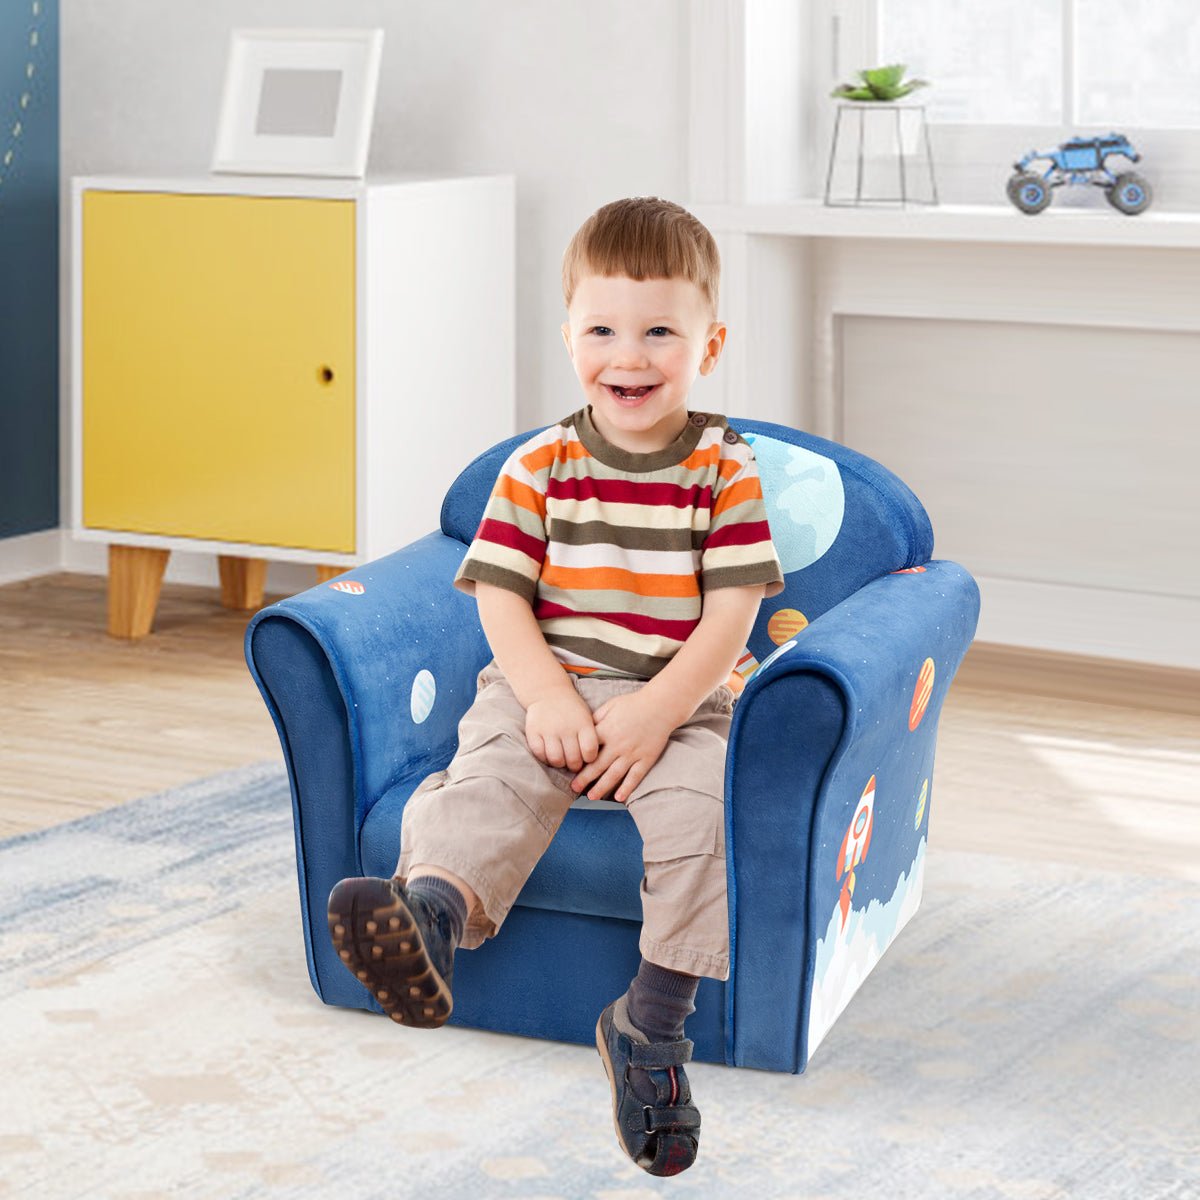 Children's Sofa: Wooden Frame Comfort for Baby Room Serenity